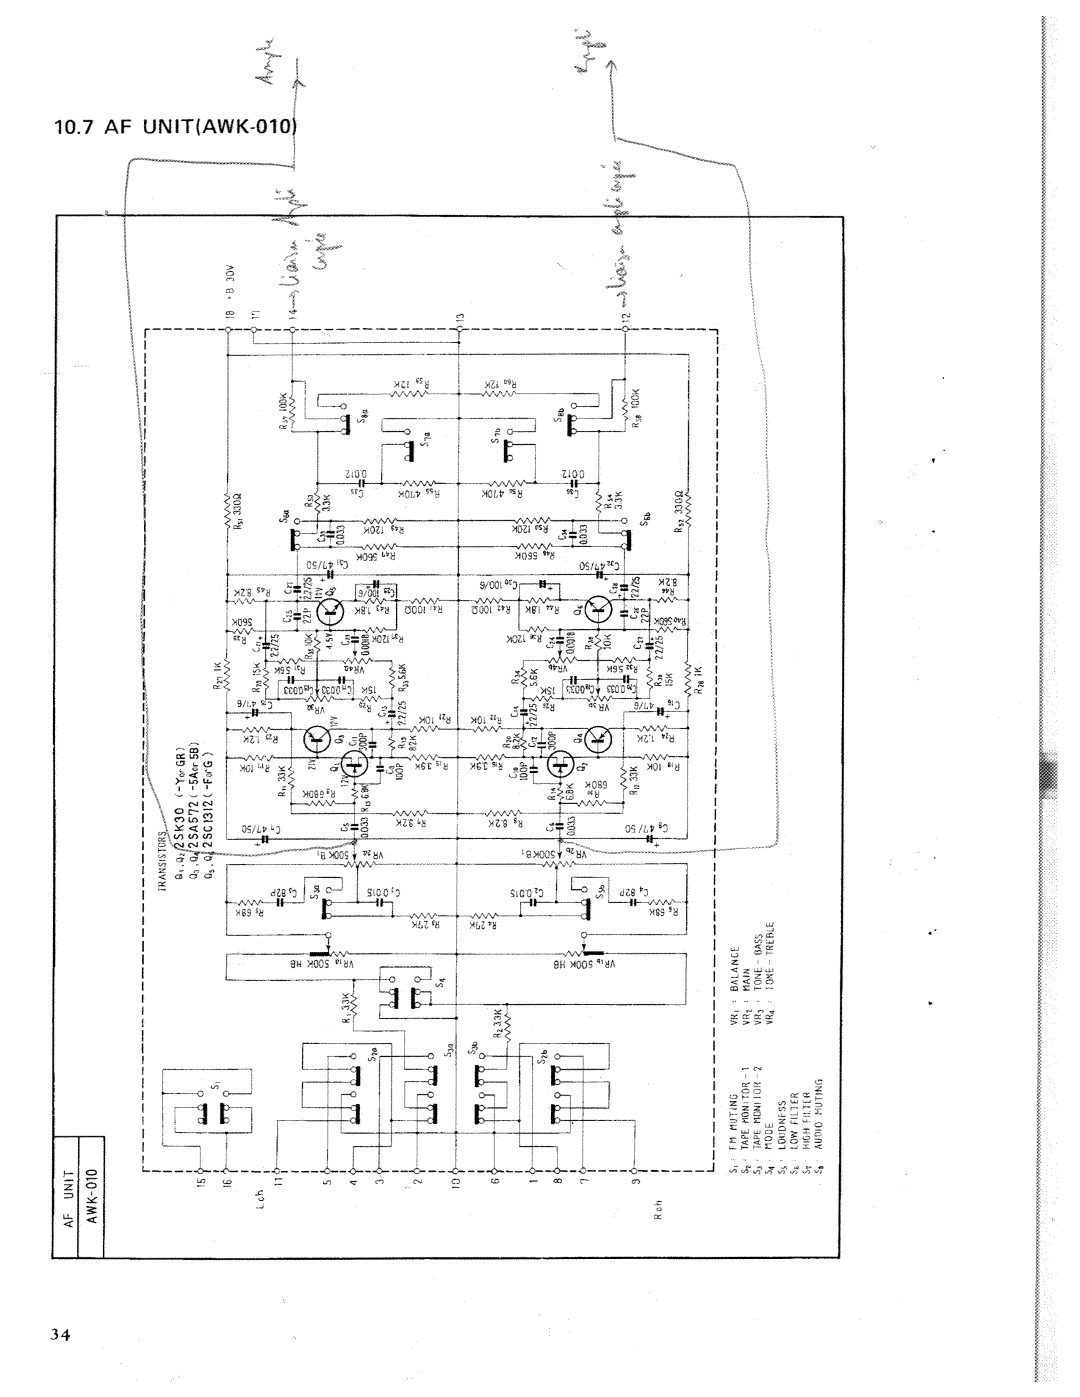 Pioneer SX-727/KUW, FVZW, FW manual 